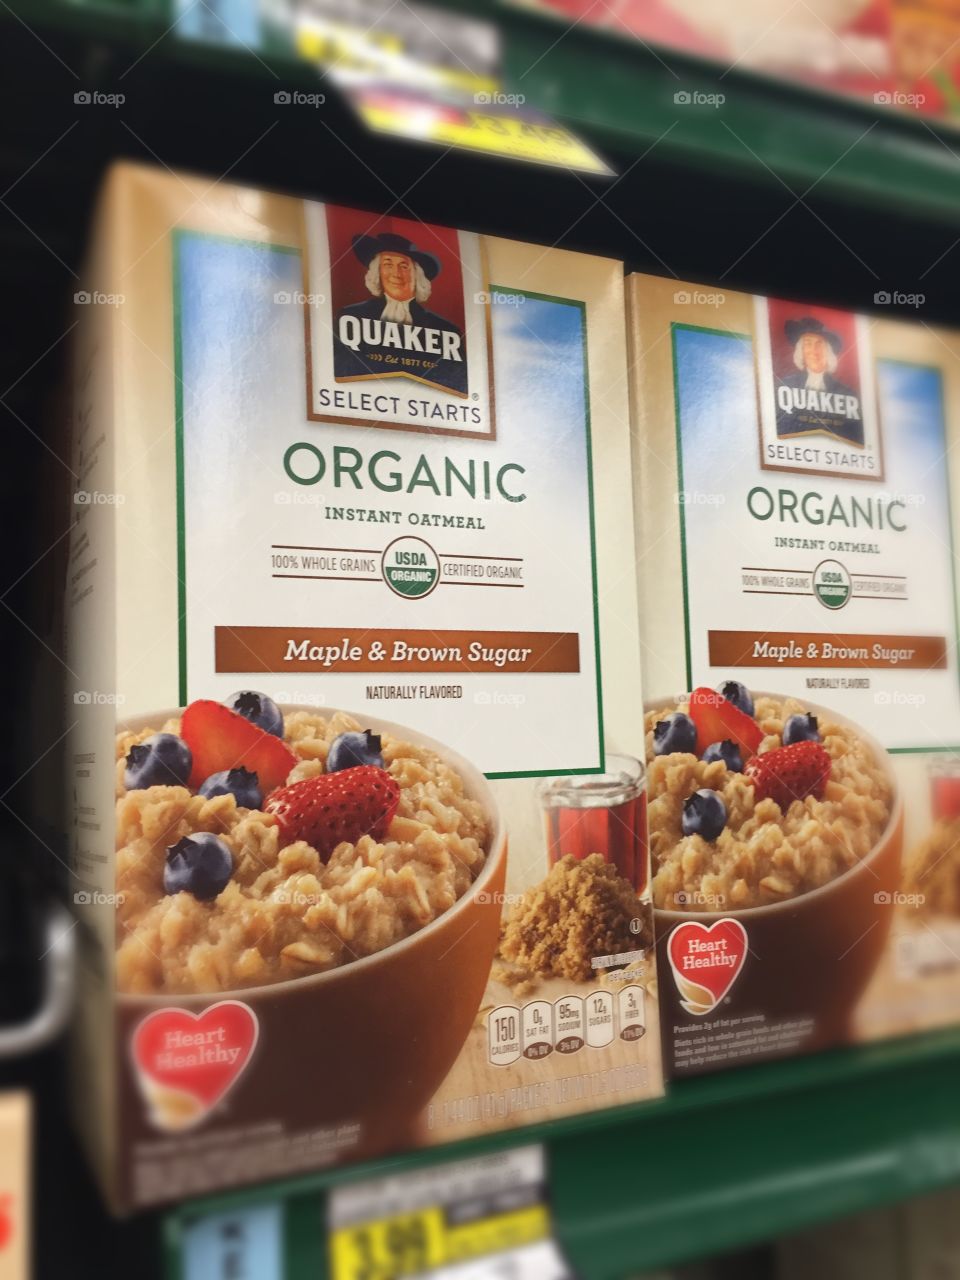 Quaker Organic Instant Oatmeal